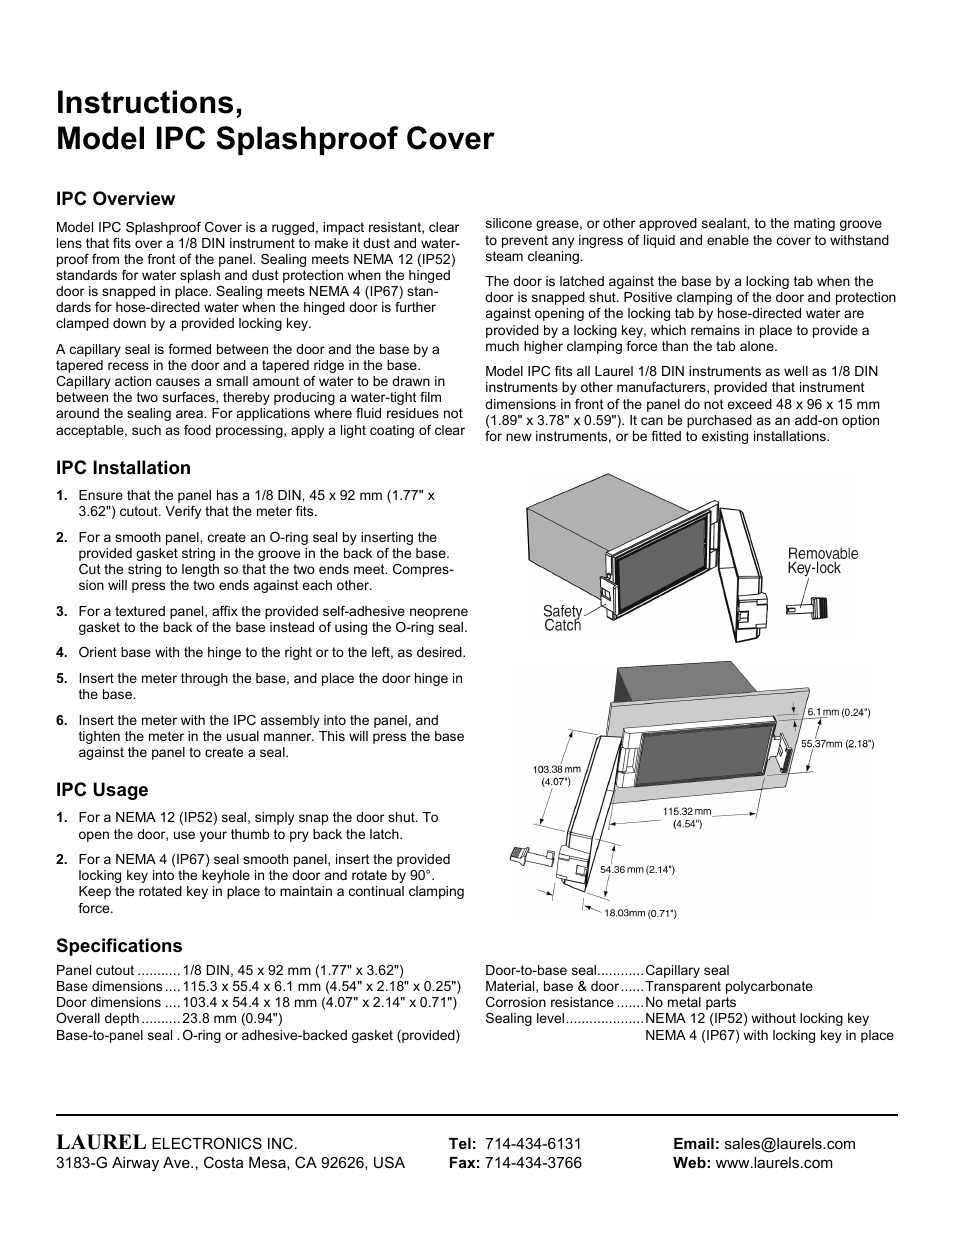 IPC Splashproof Cover - Manual